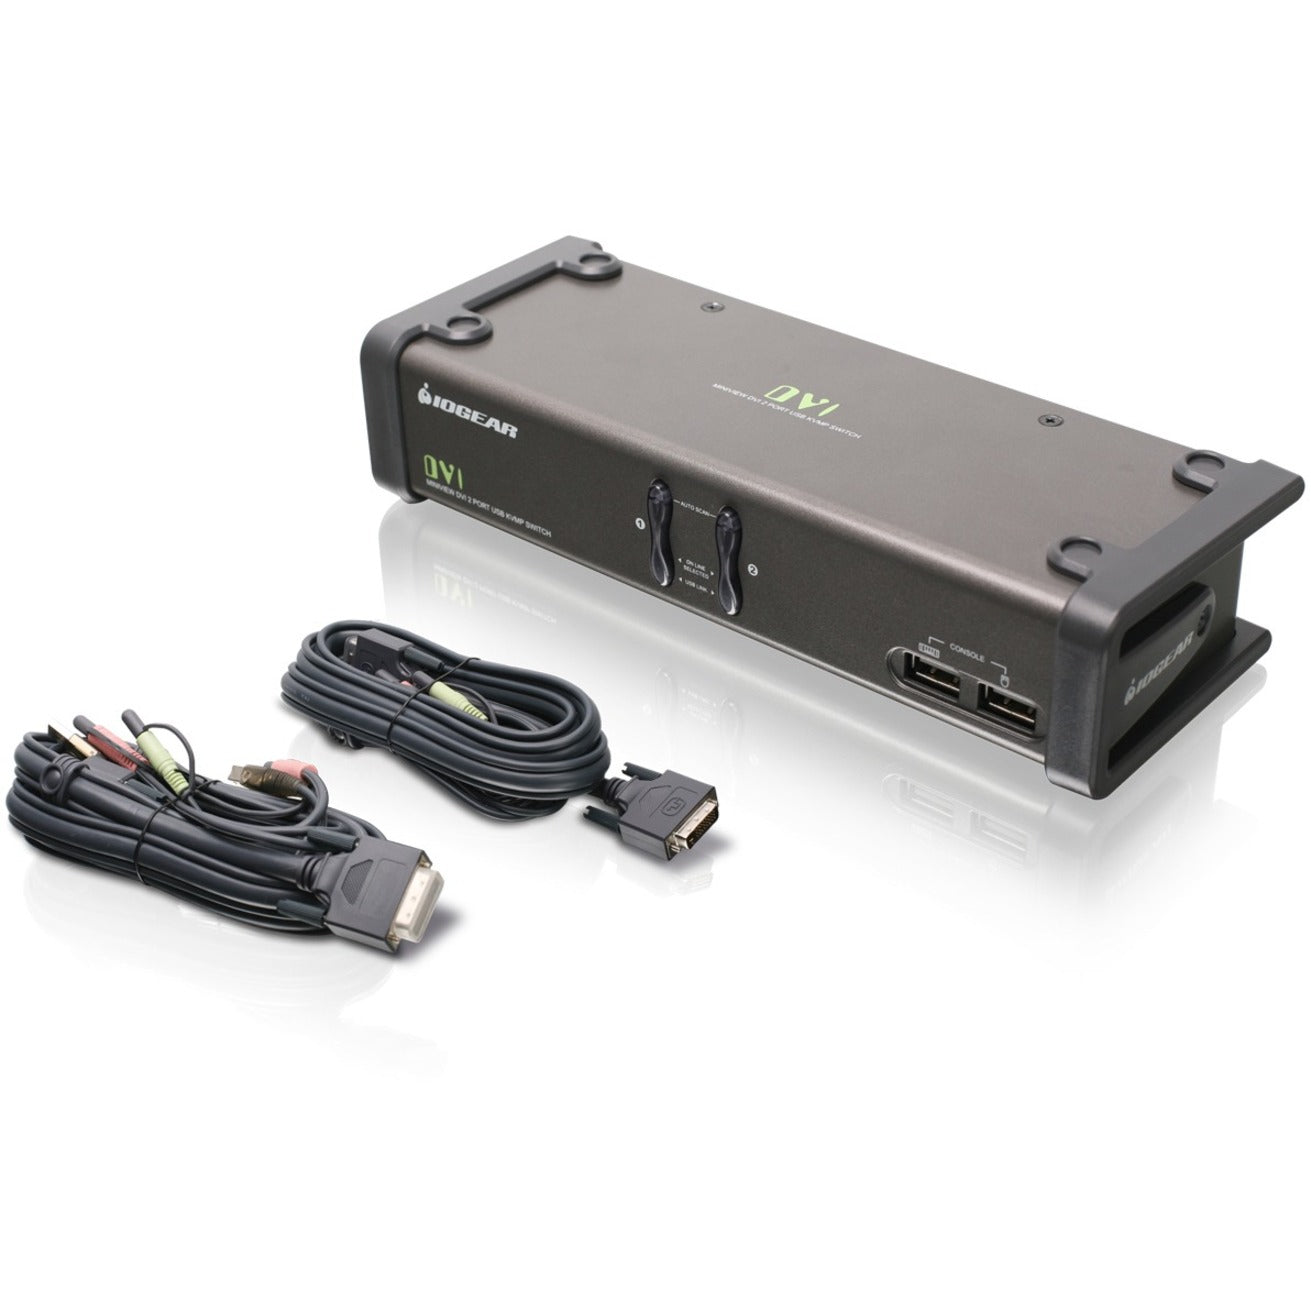 IOGEAR GCS1102 DVI KVM Switch, 2-Port USB DVI-D KVM Switchbox, WUXGA, 1920 x 1200 Resolution, 3-Year Warranty